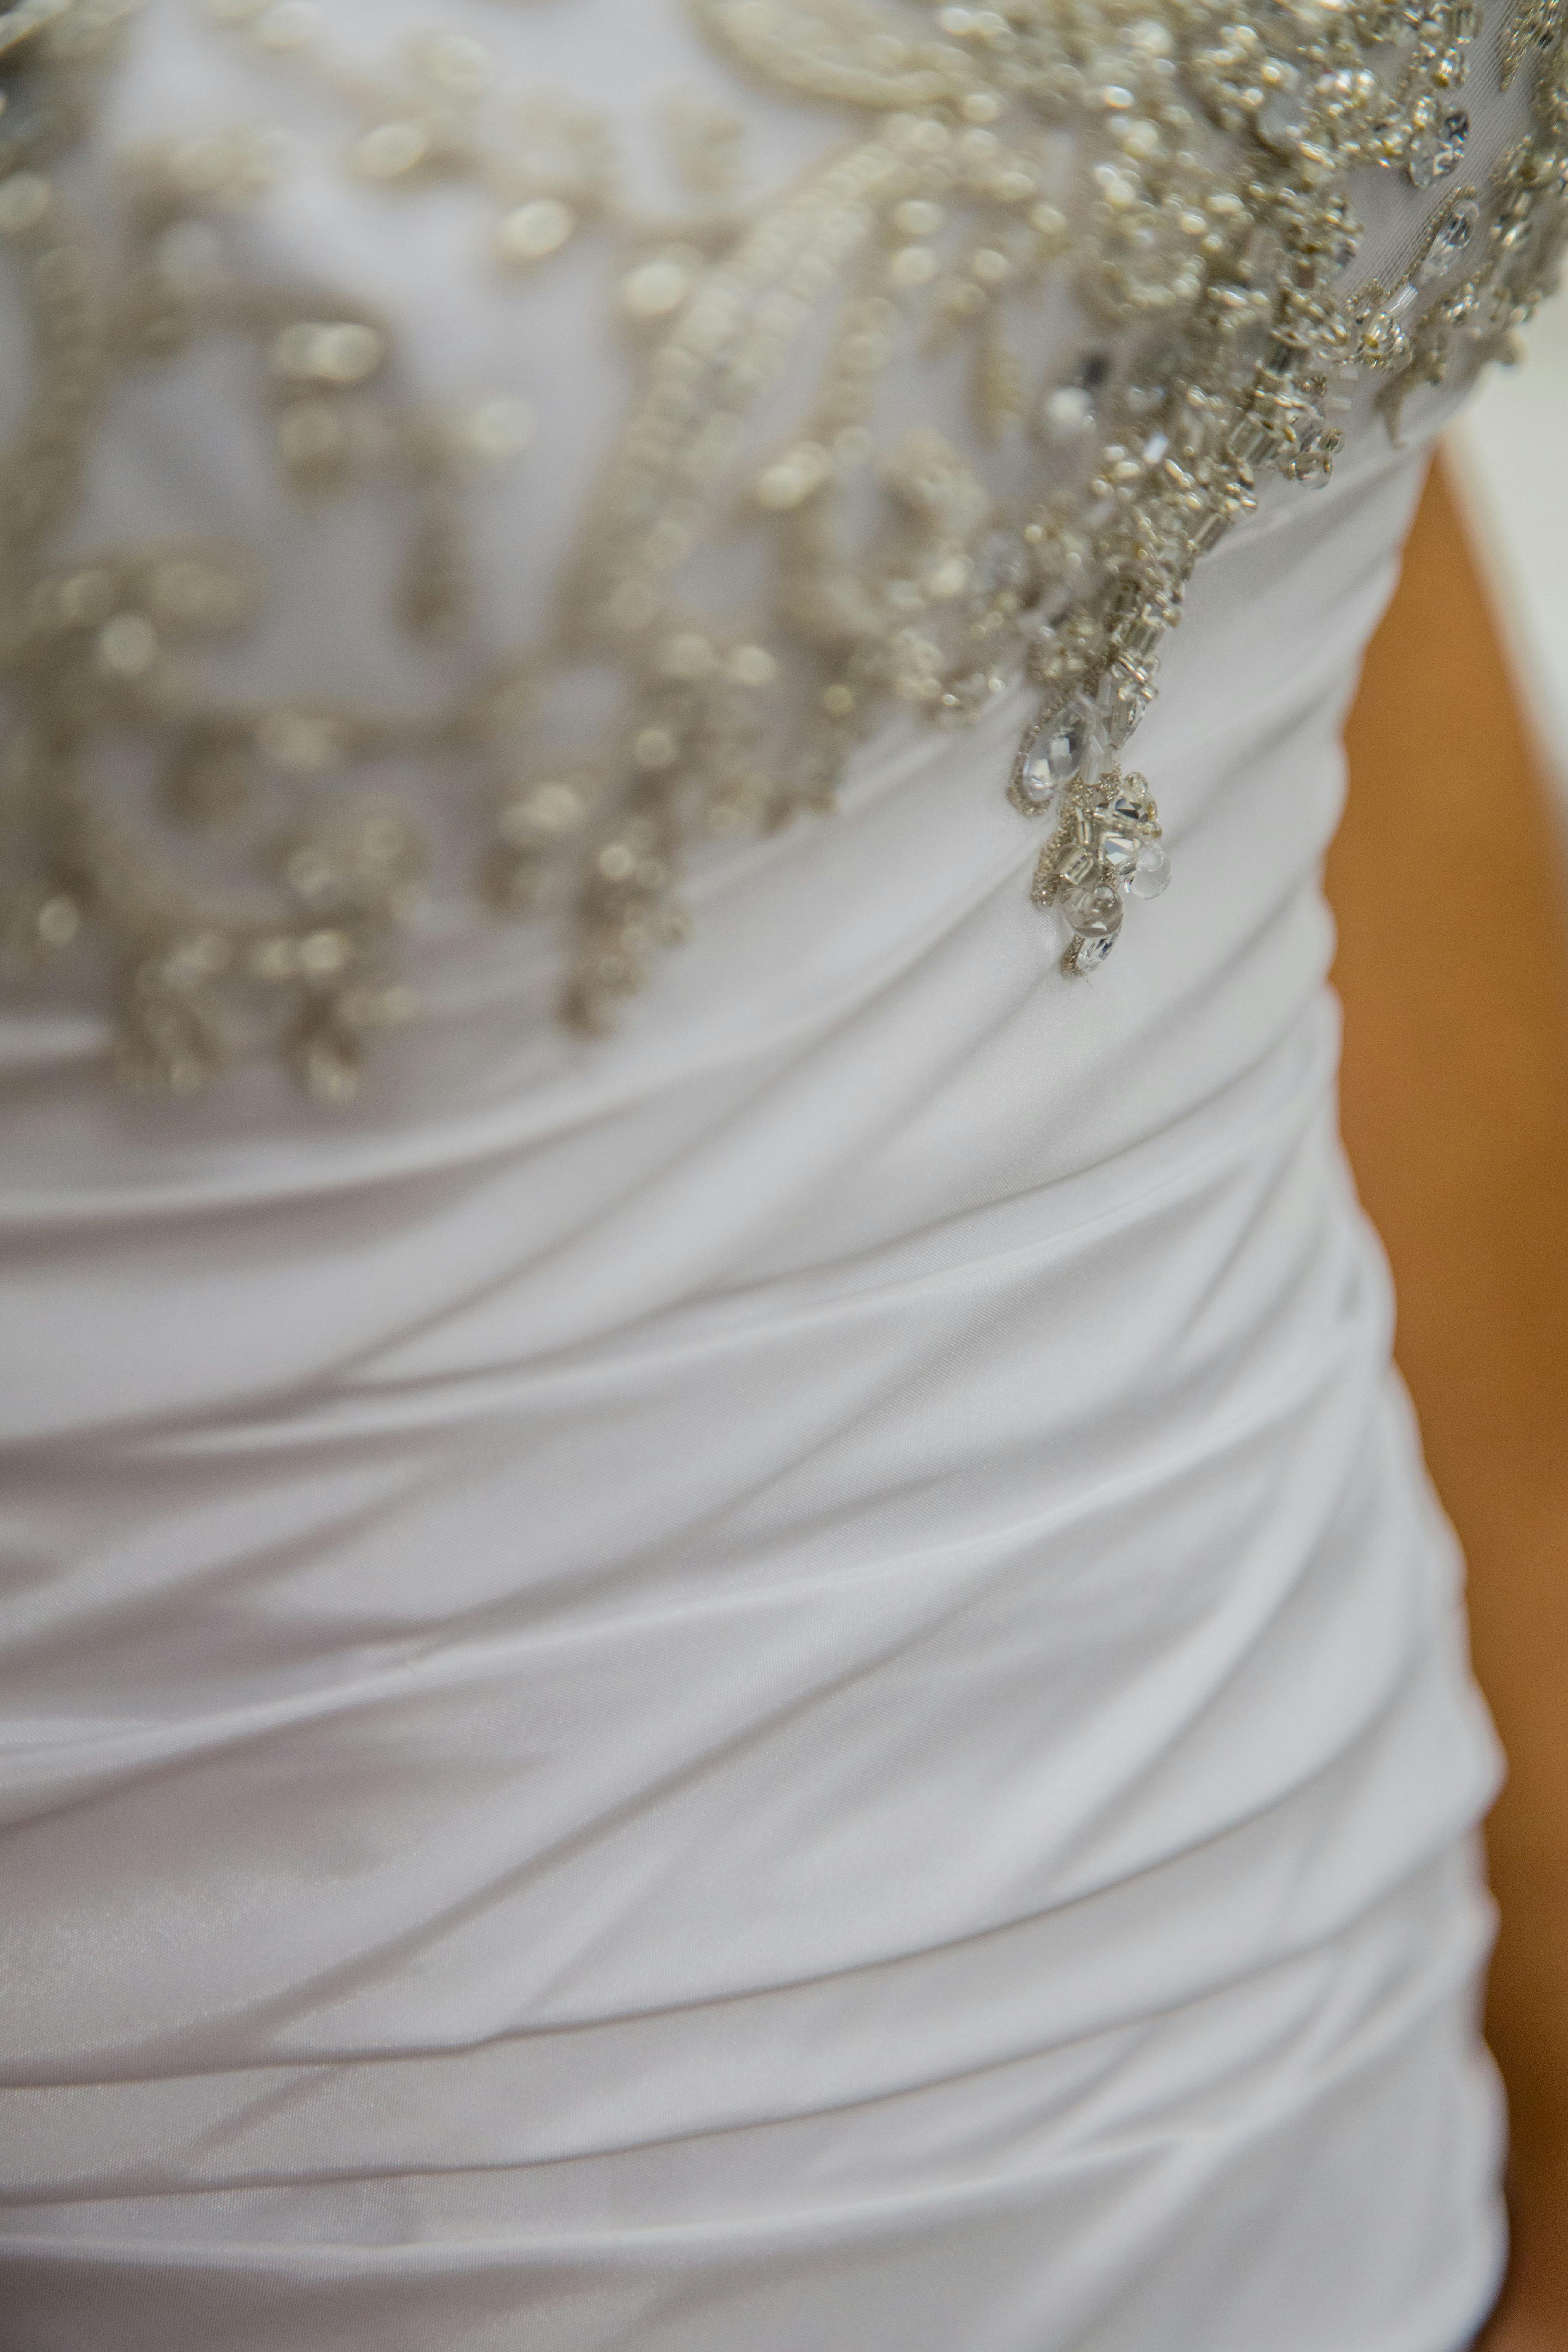 Free stock photo of bride, wedding, wedding gown